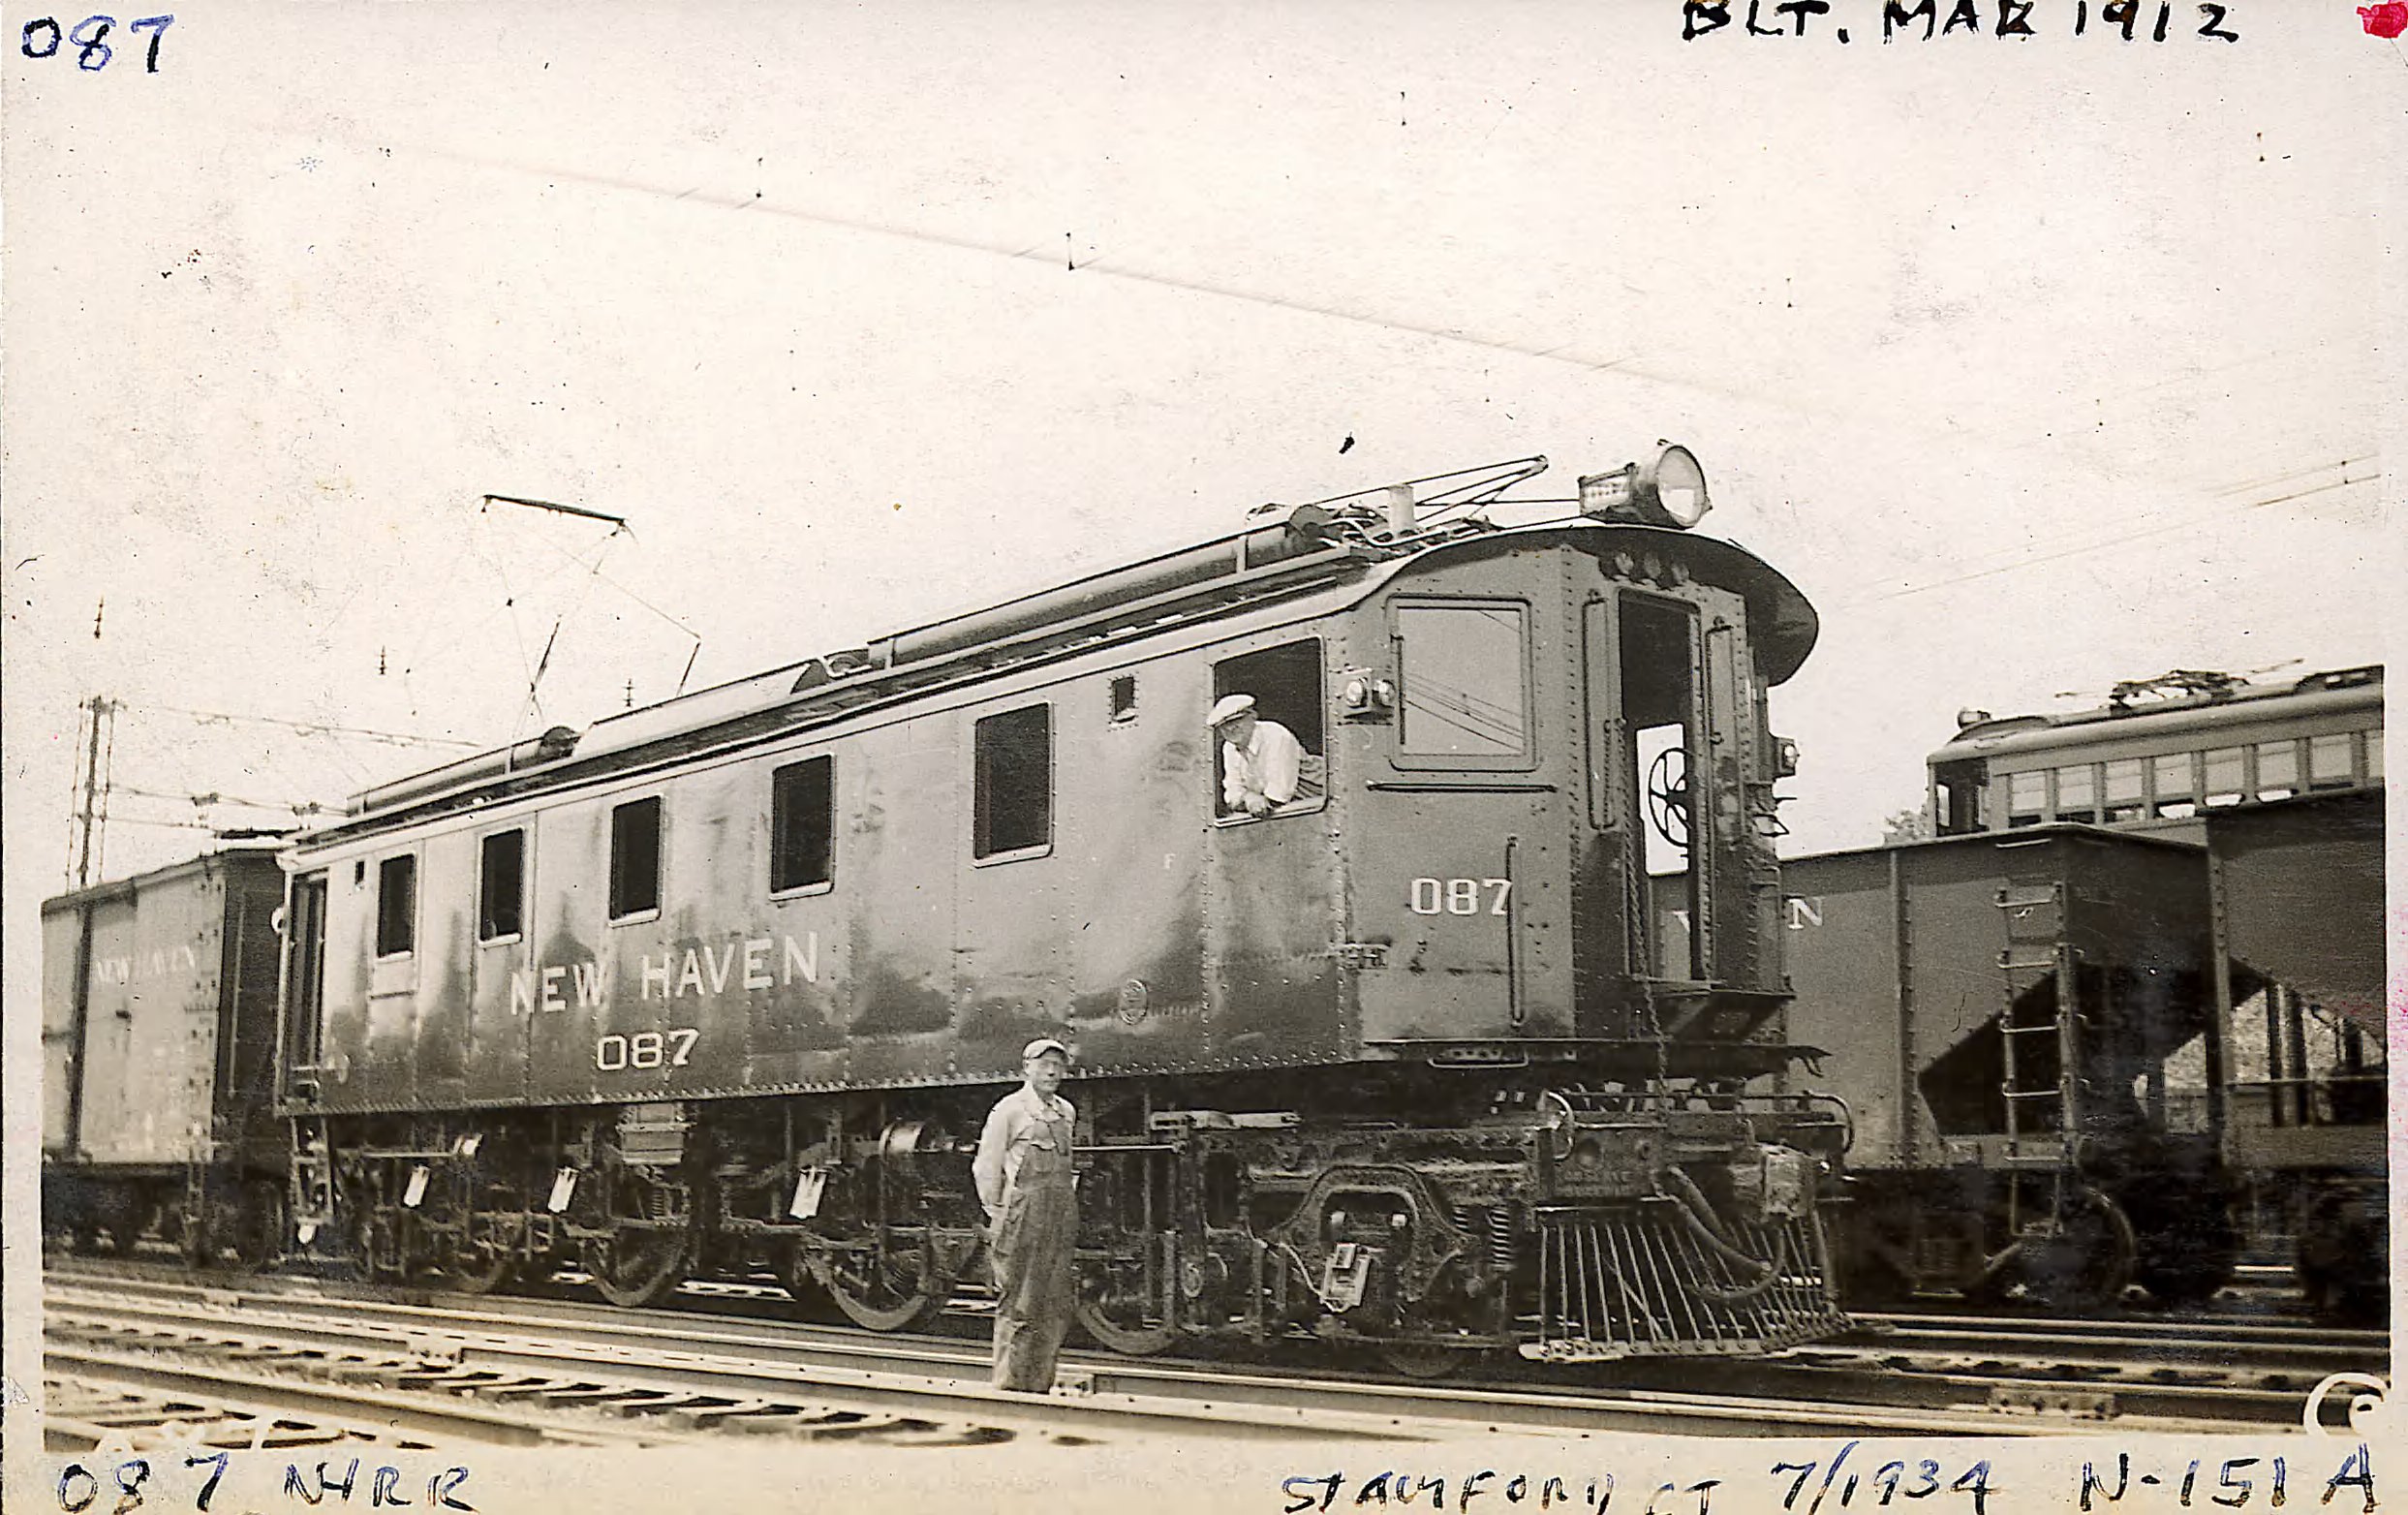 Locomotive 087, built March 1912